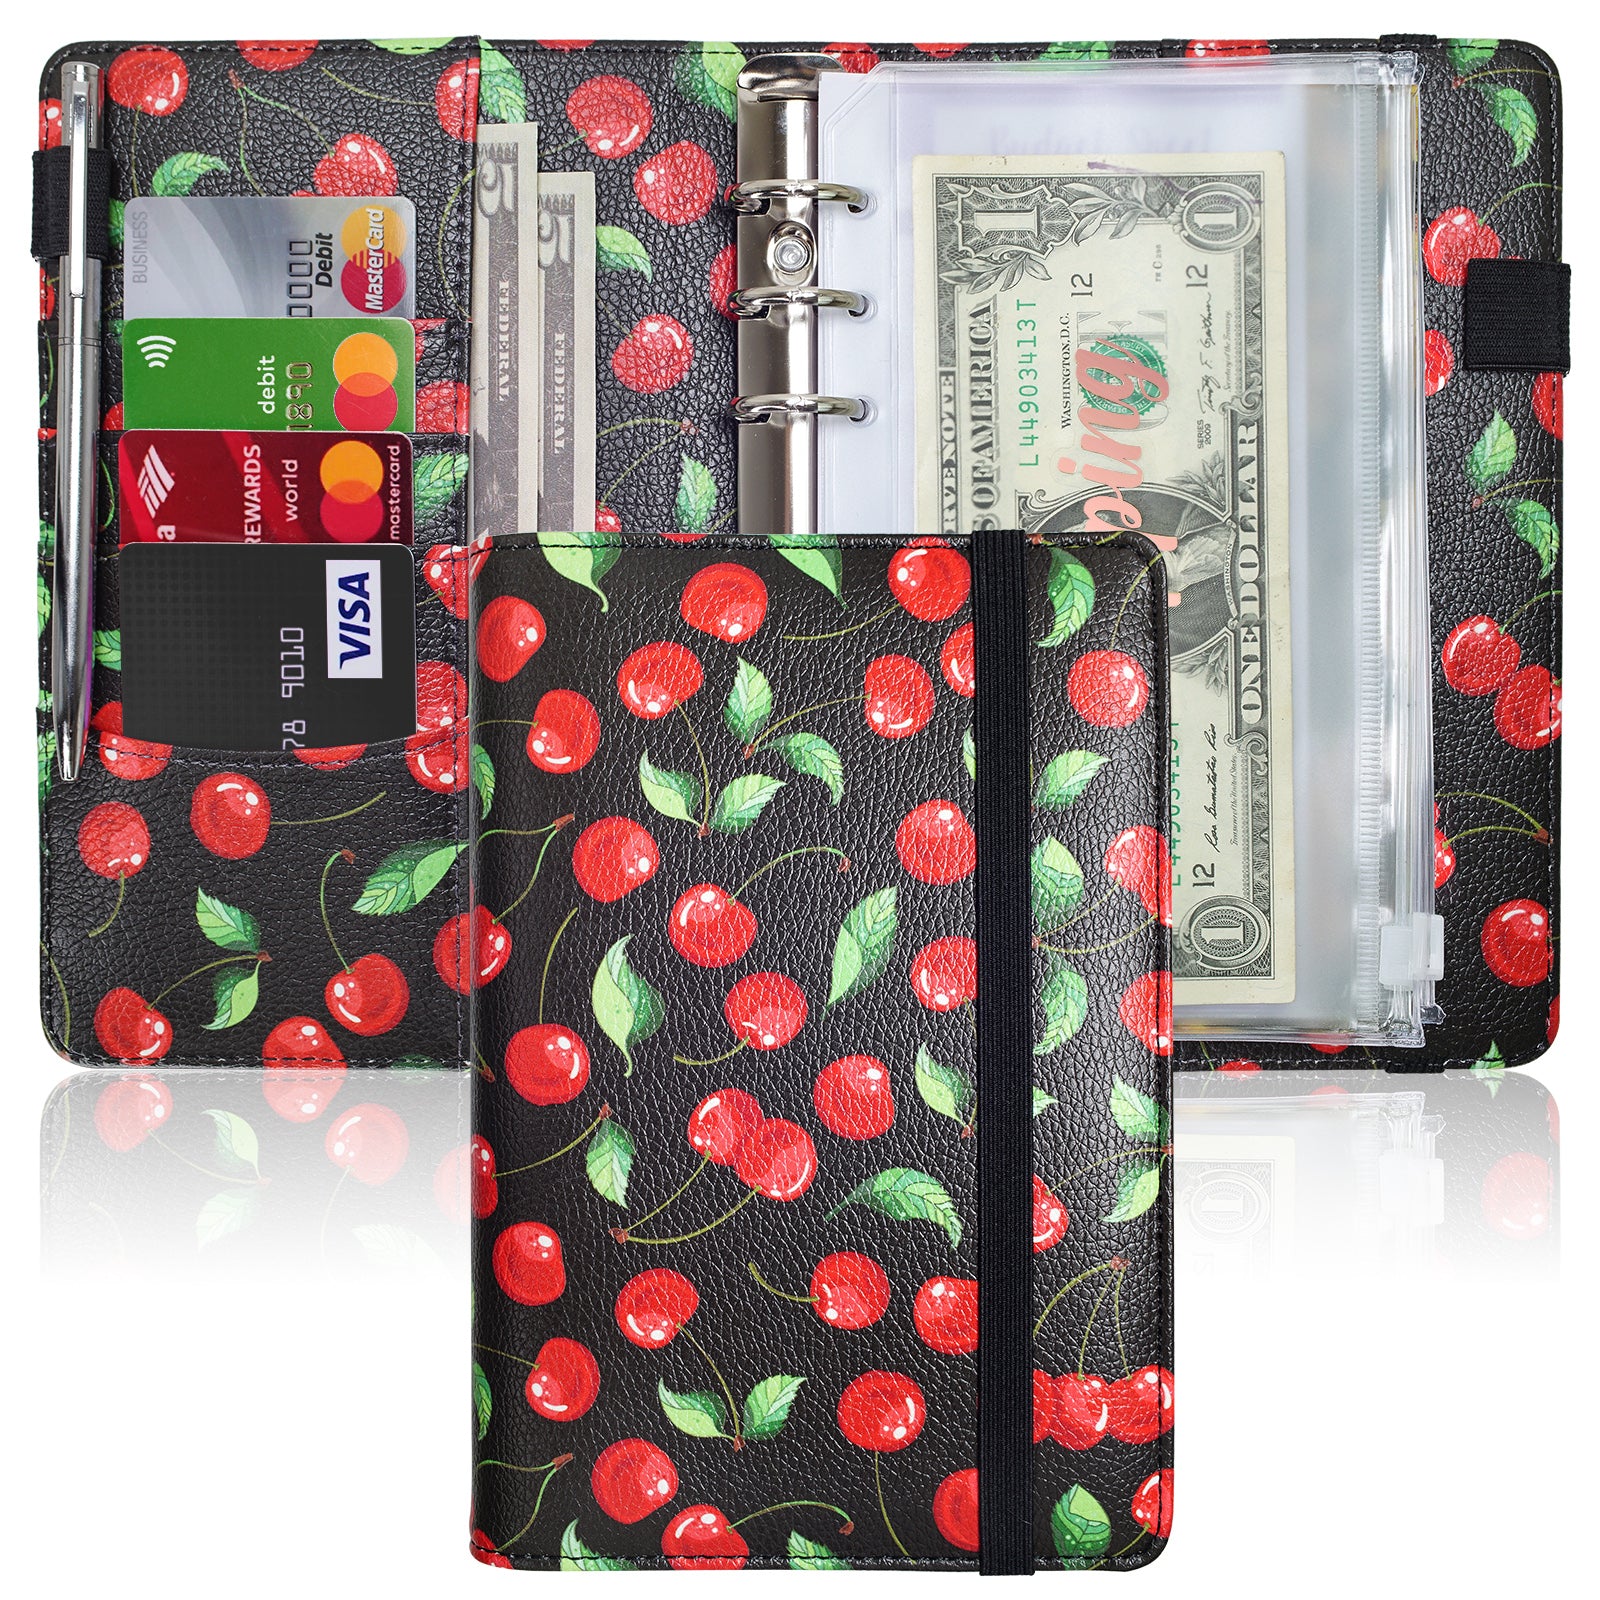 A6 Budget Binder for Money Saving Binder 8 Cash Pockets (Red Cherry)